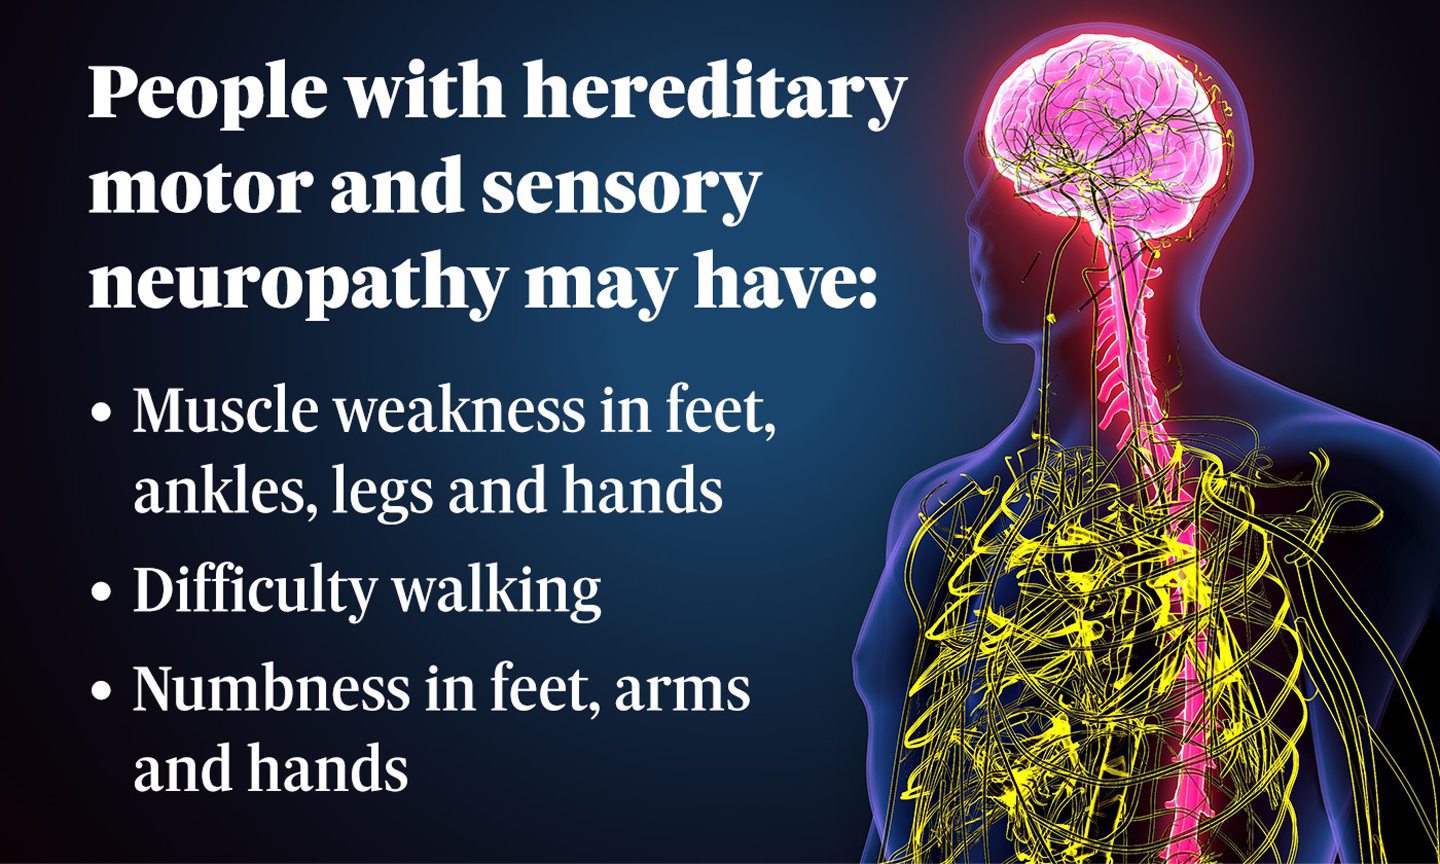 Hereditary motor and sensory neuropathy symptoms.